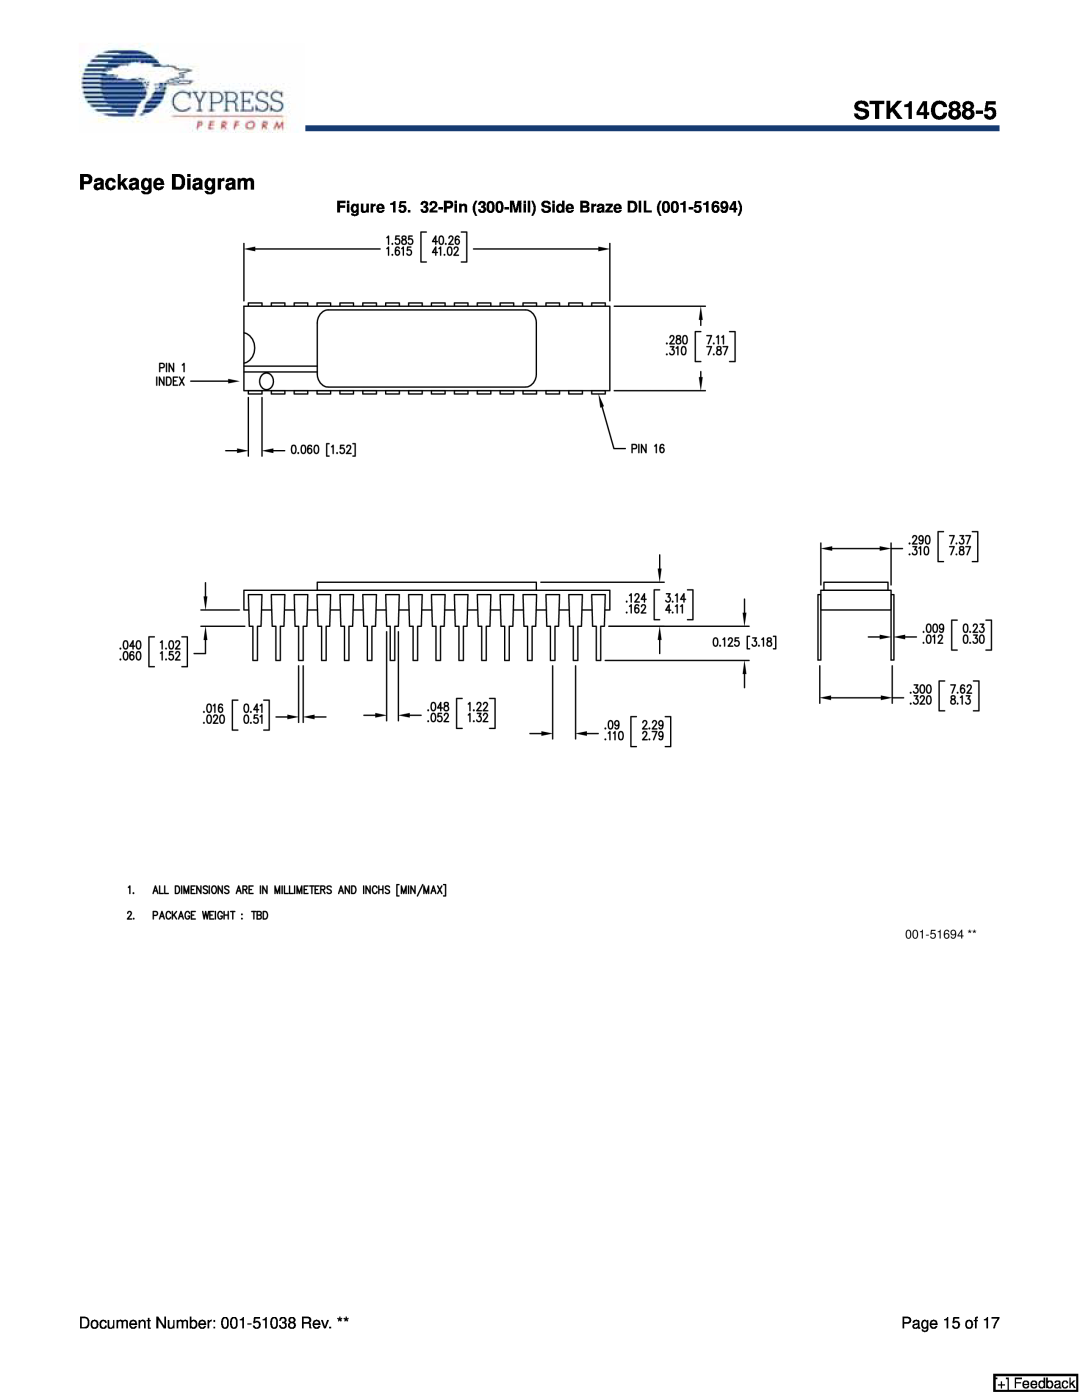 Cypress STK14C88-5 manual Package Diagram, 32-Pin 300-Mil Side Braze DIL, + Feedback, 001-51694 